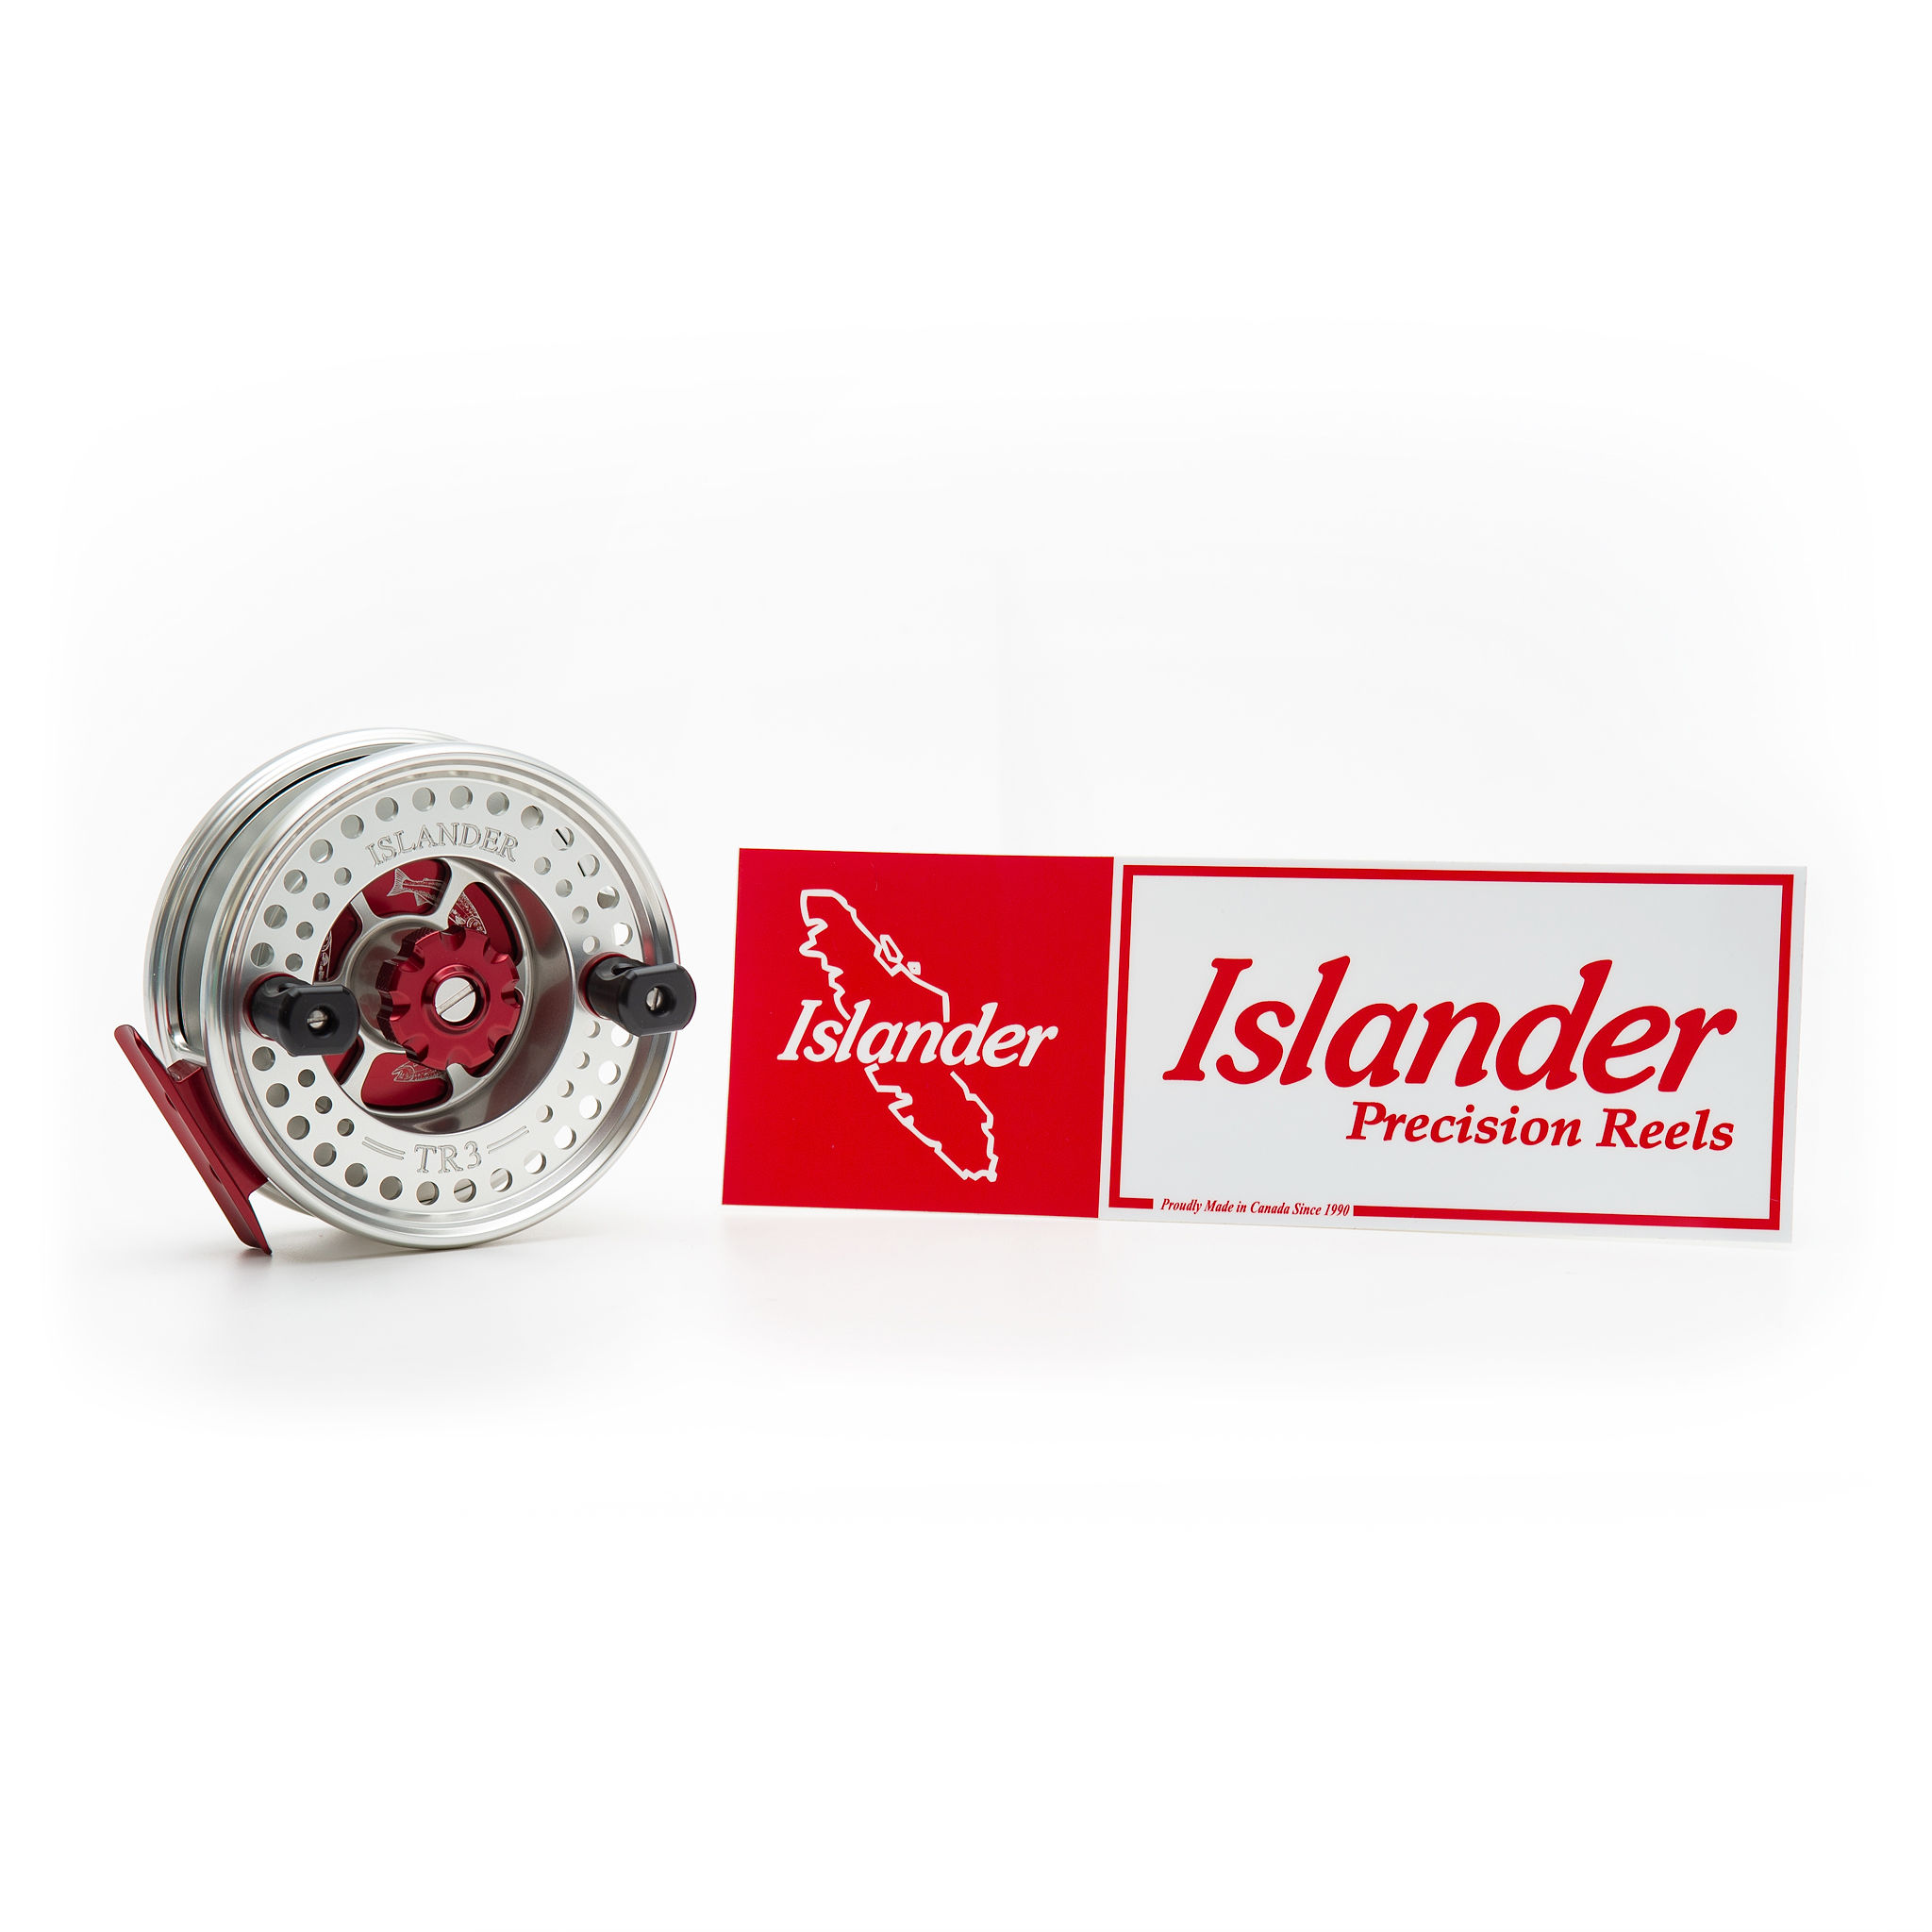 Logo Boat Decal – Islander Precision Reels